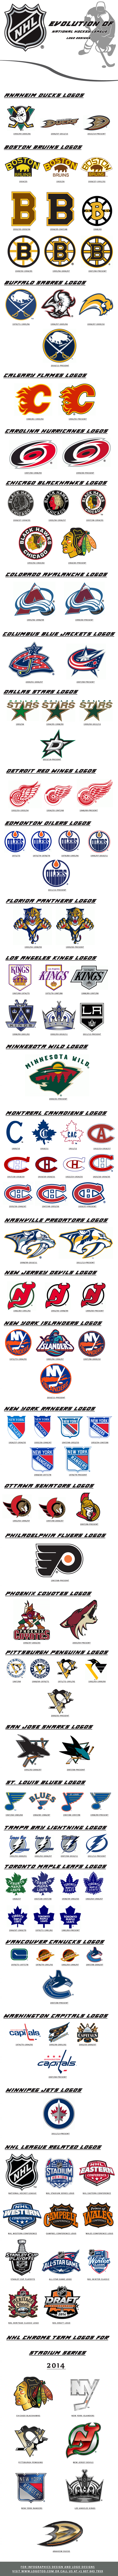 The Evolution Of NHL Logo Design Infographic